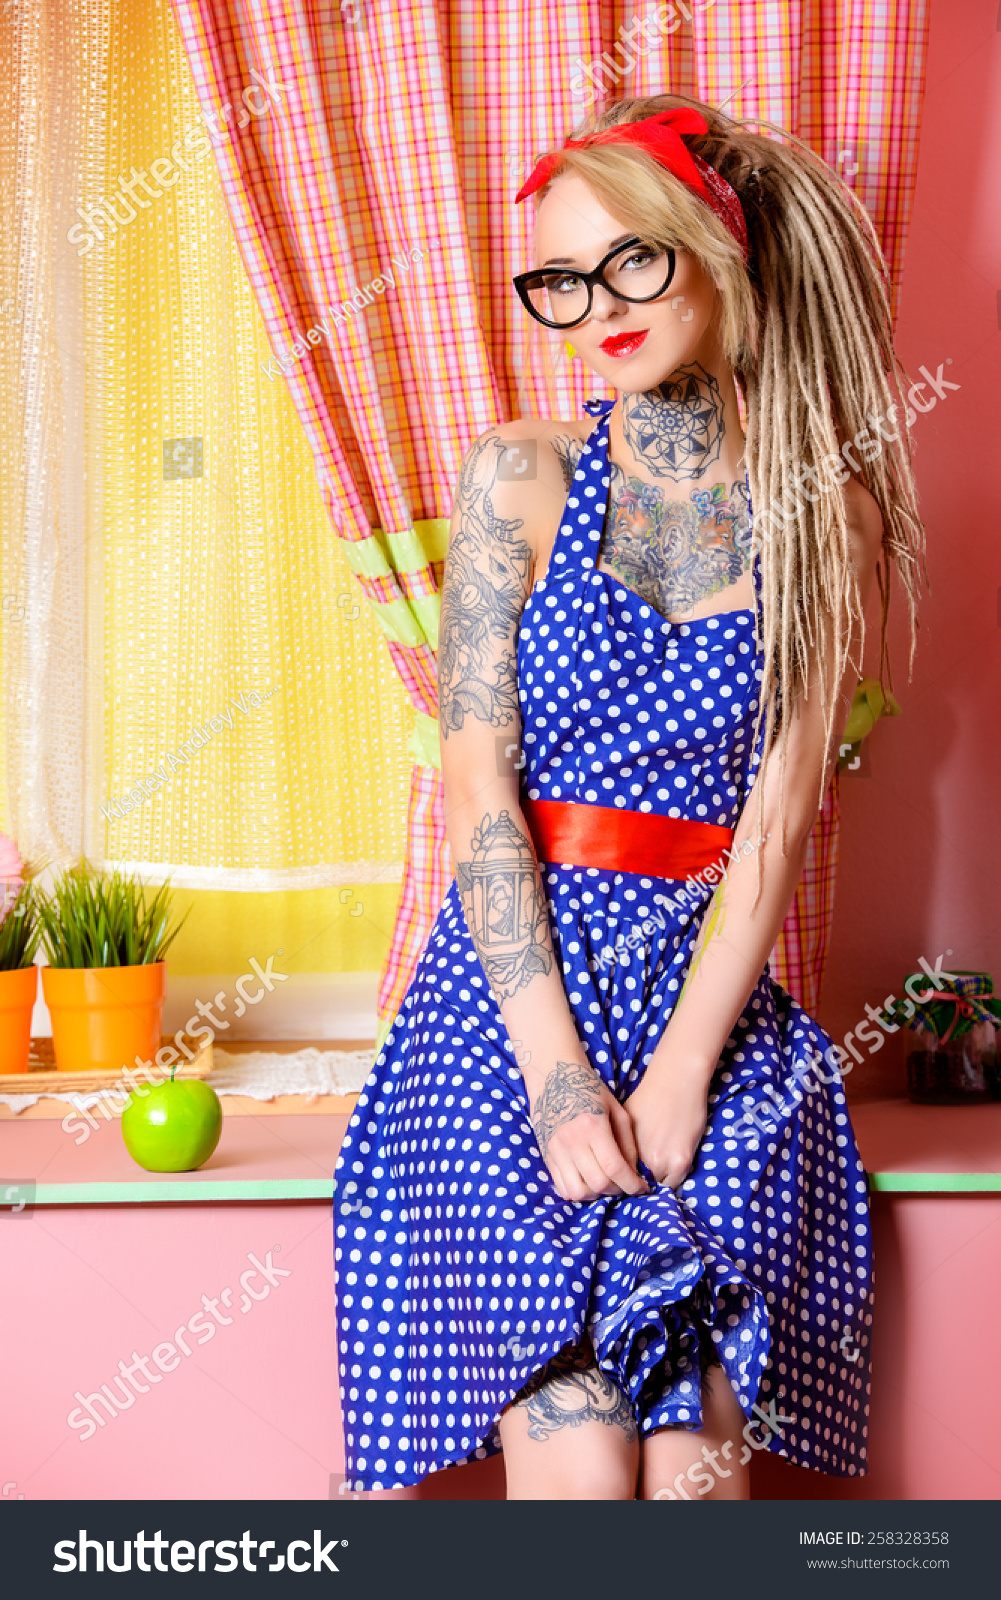 old fashioned polka dot dress